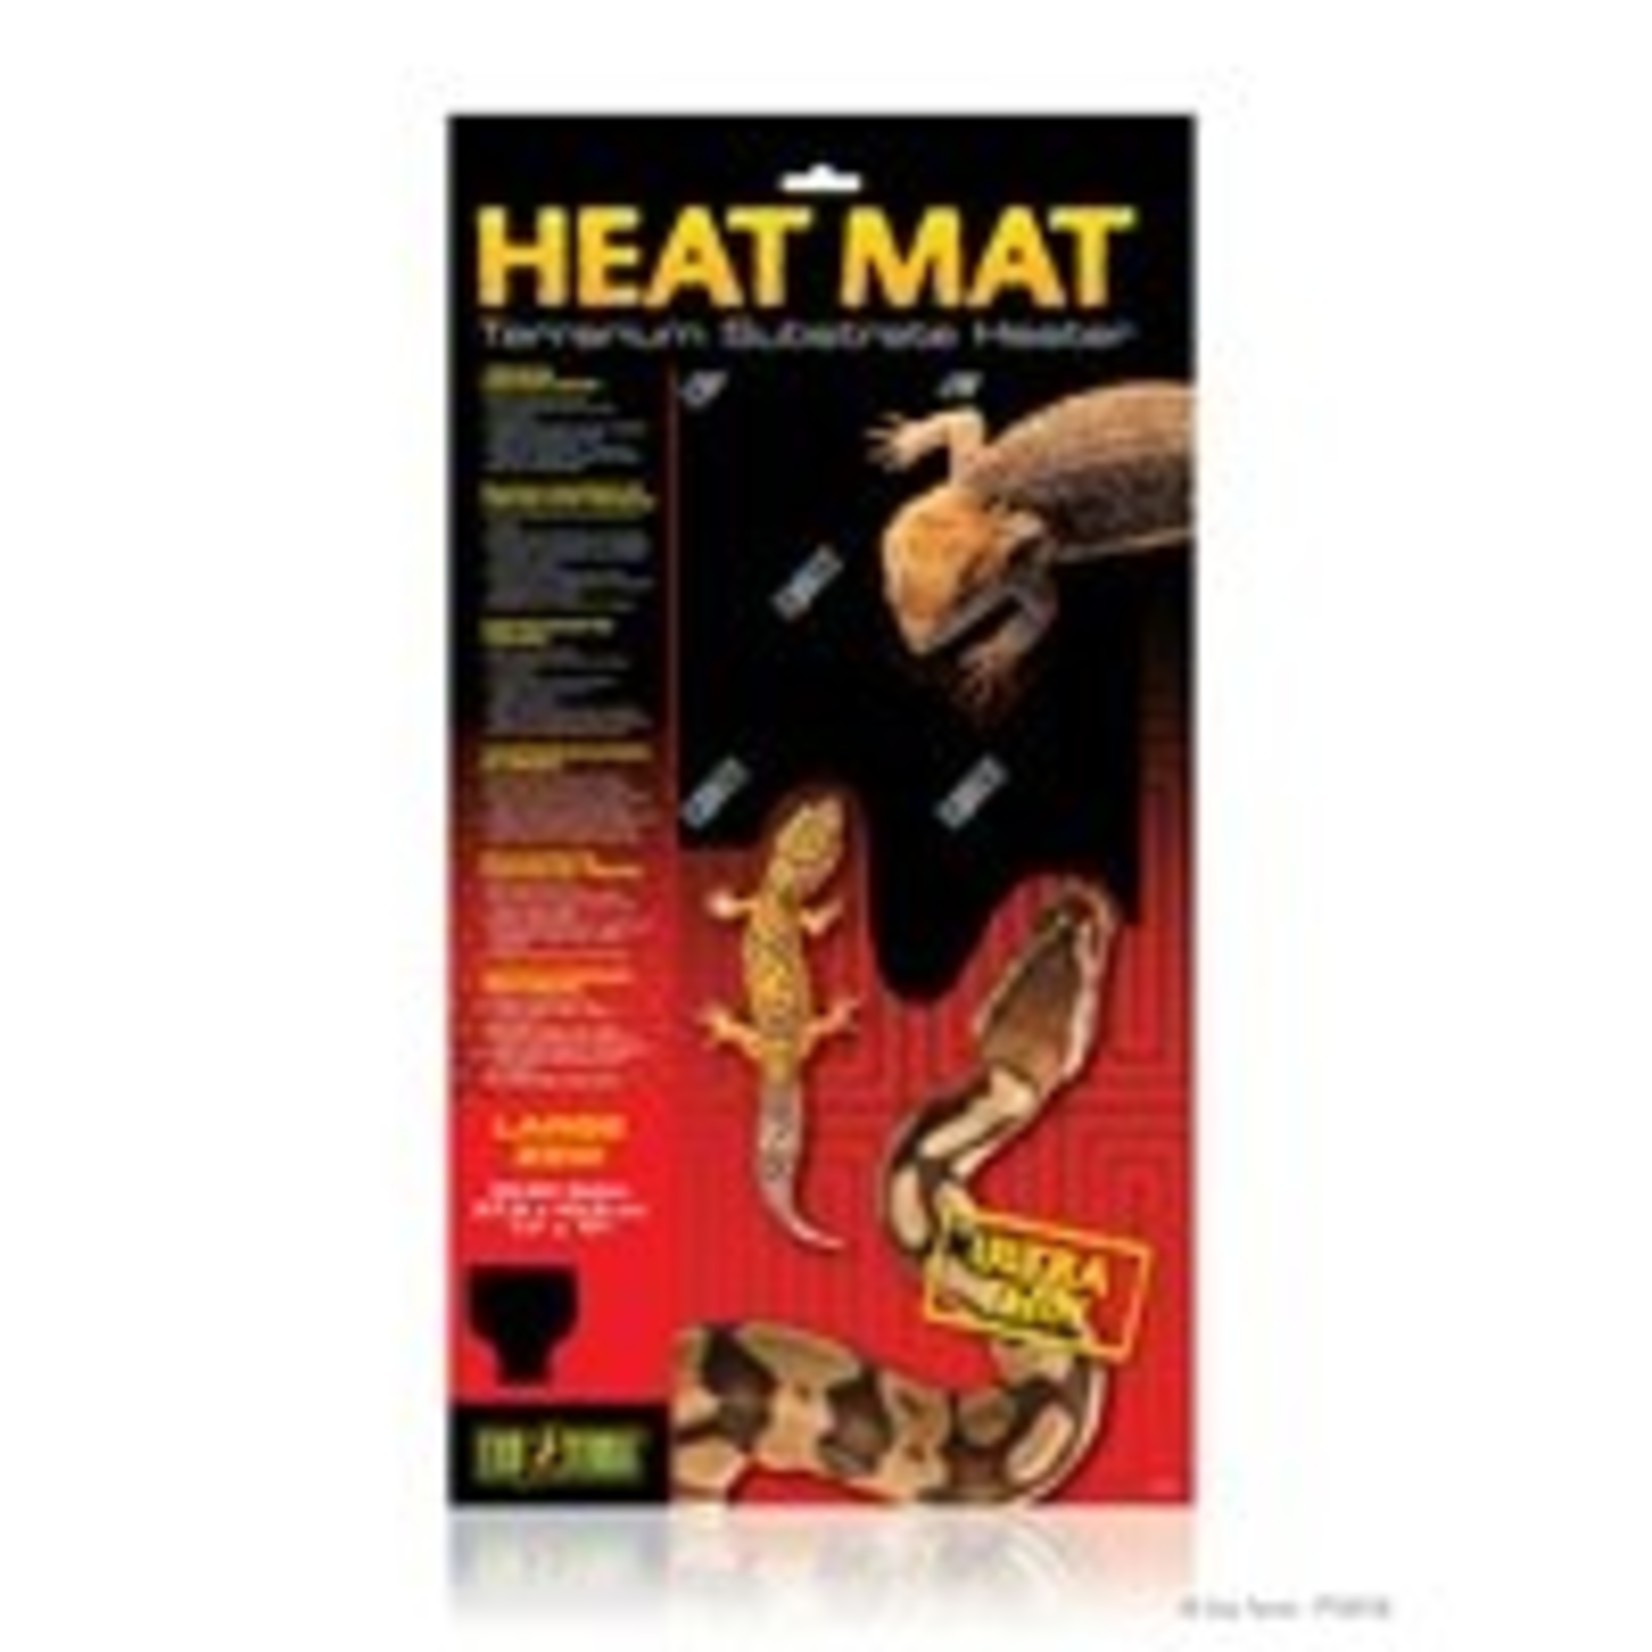 ExoTerra Heat Mat Large 27.9x43.2cm